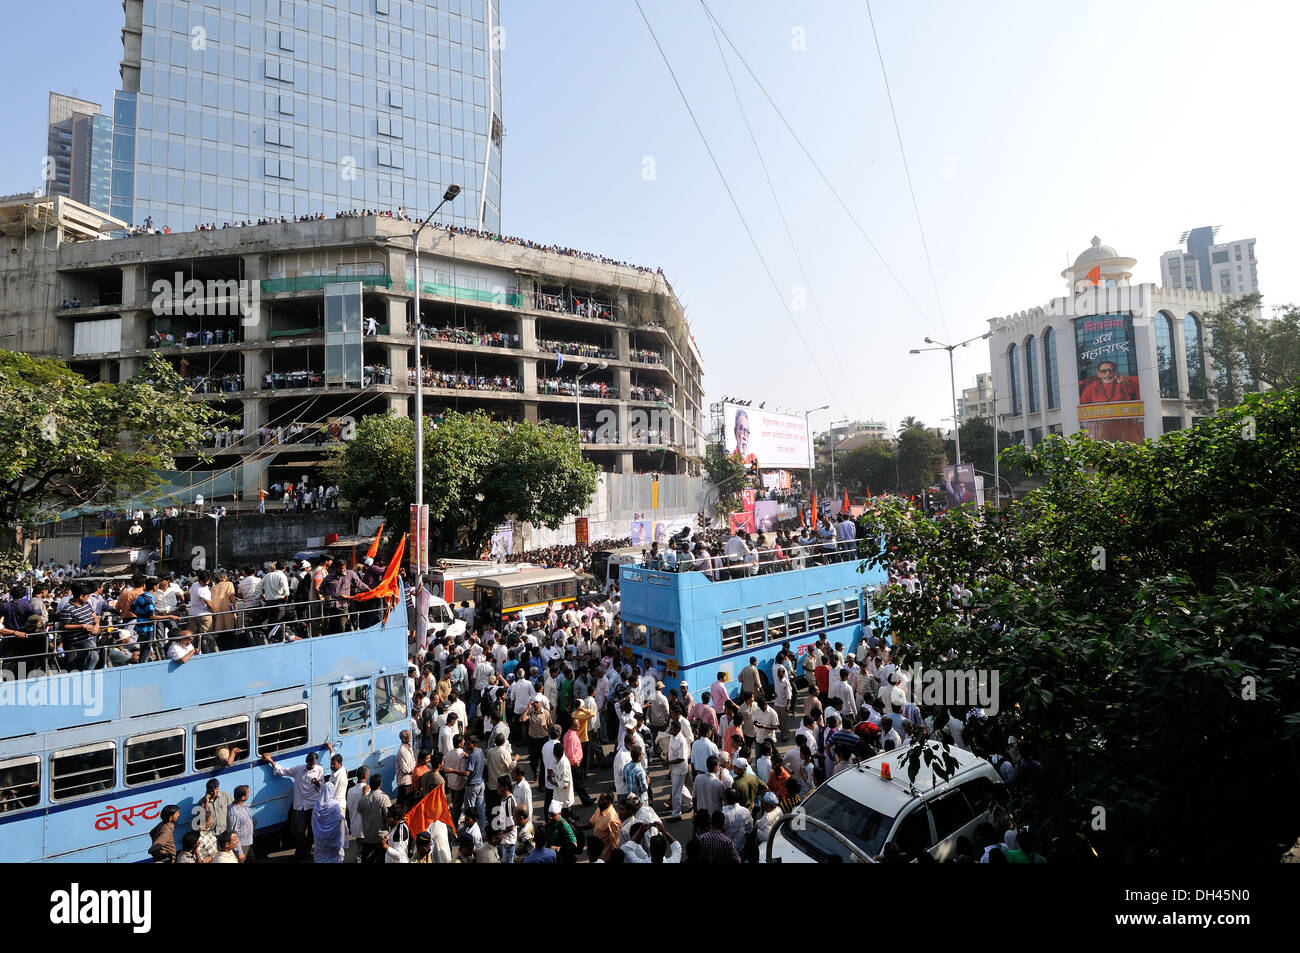 Balasaheb Thackeray Funeral Procession Crowd at dadar mumbai maharashtra india November 2012 Stock Photo